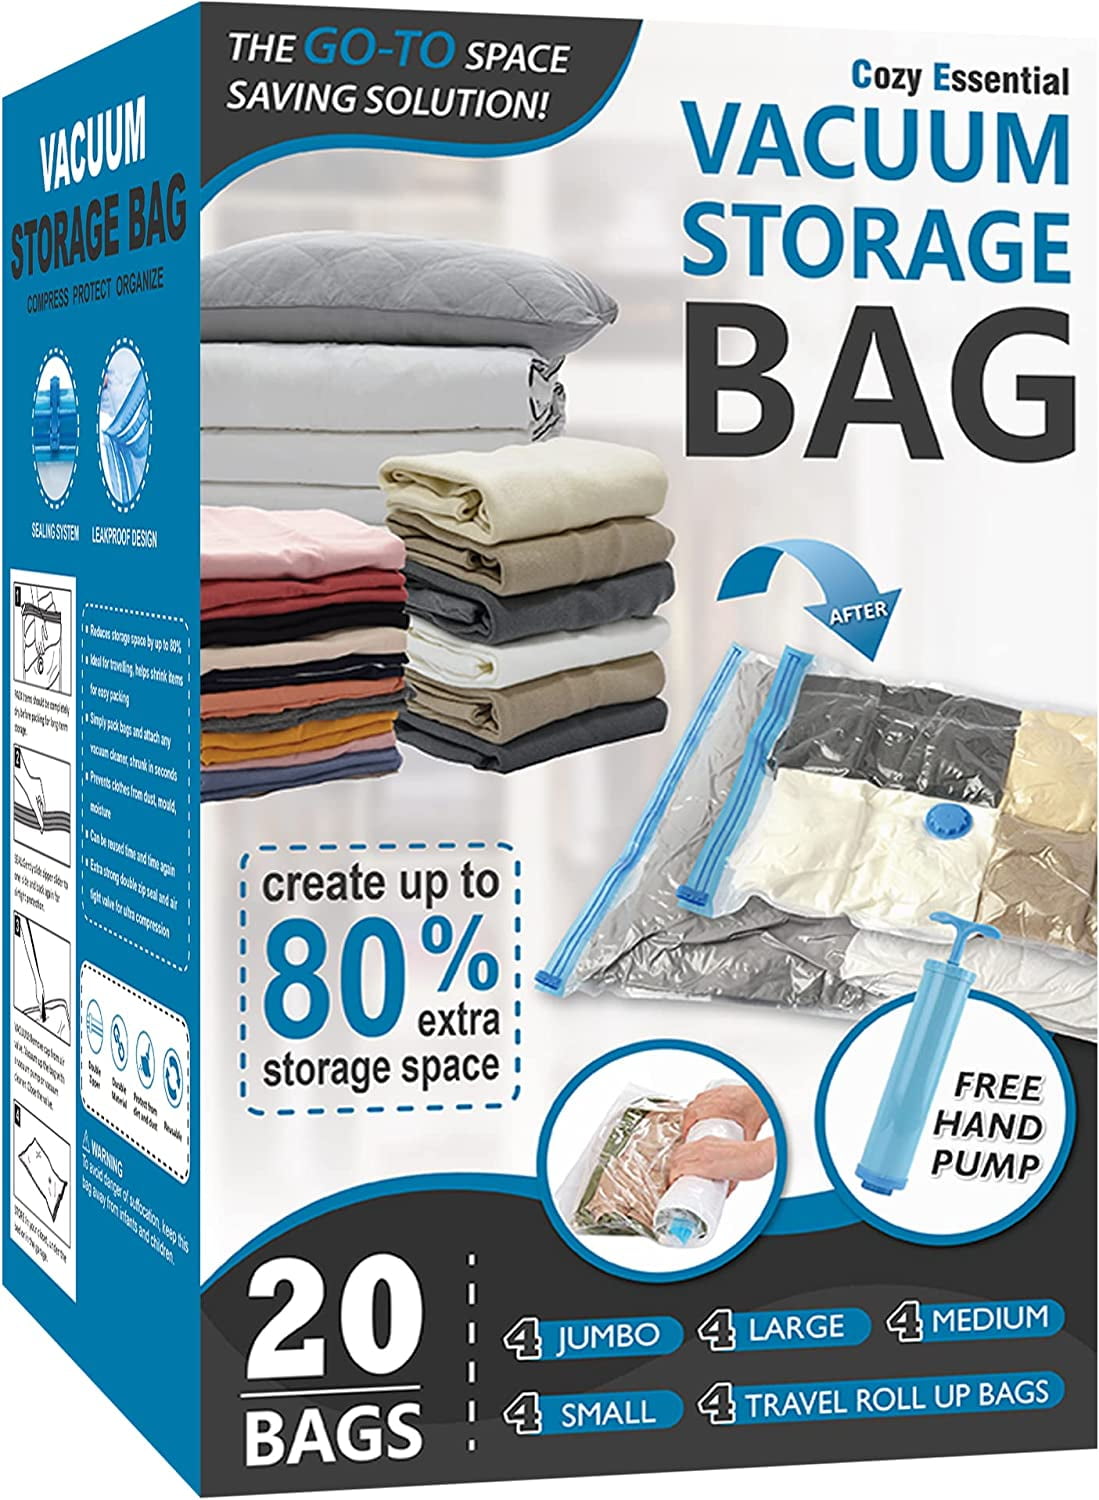 4 Pack Extra Large Space Saver Bags Vacuum Seal Storage Bag